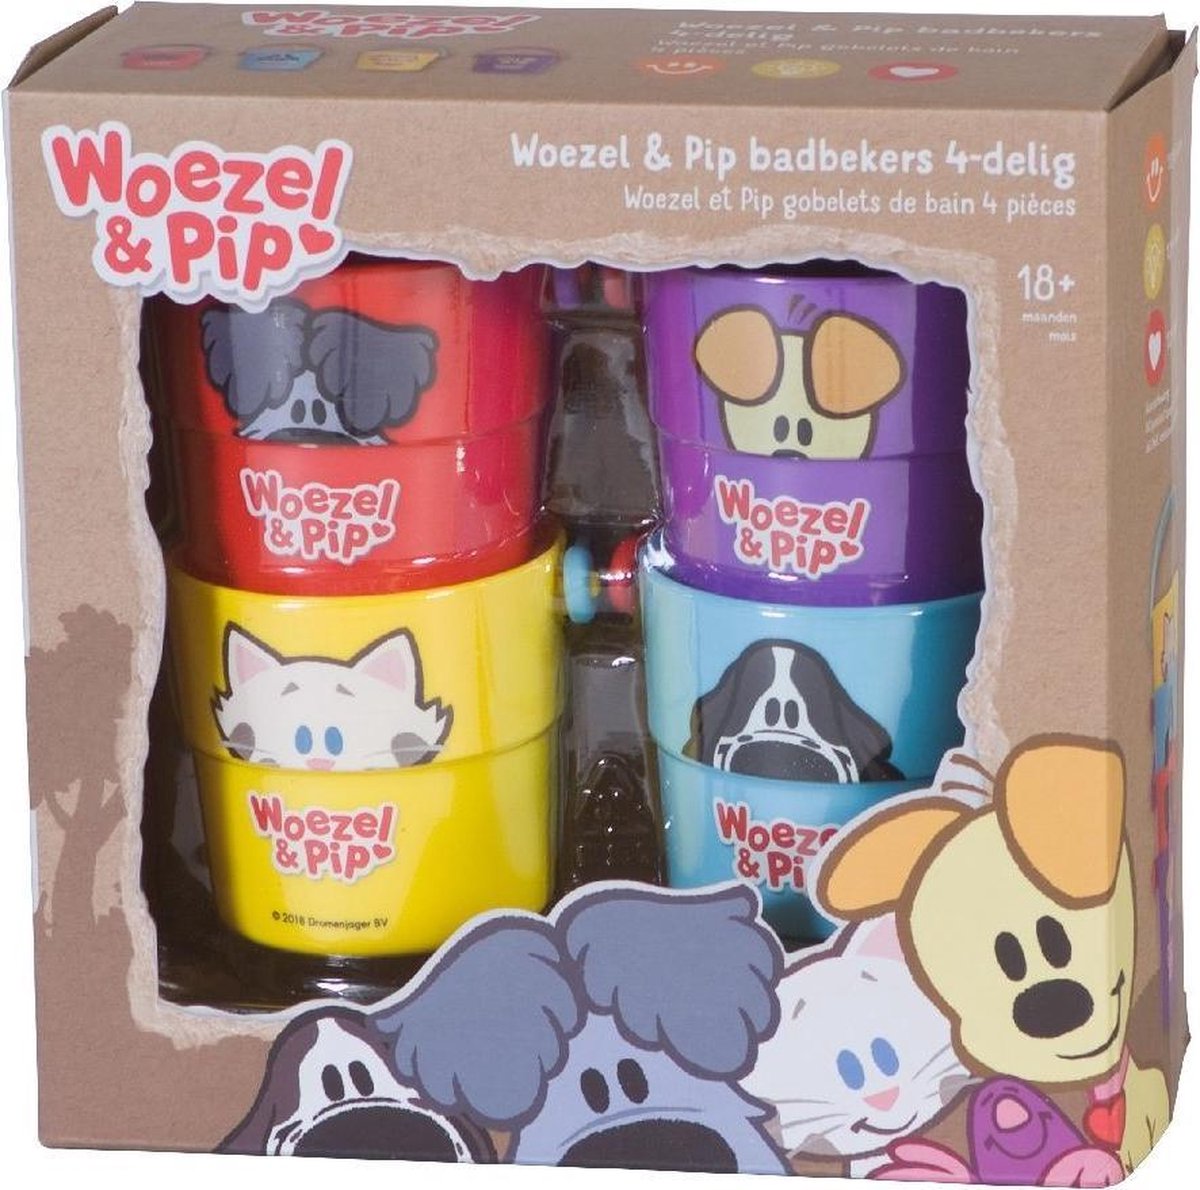 Rubo Toys Badbekers Woezel & Pip 4-delig bol.com